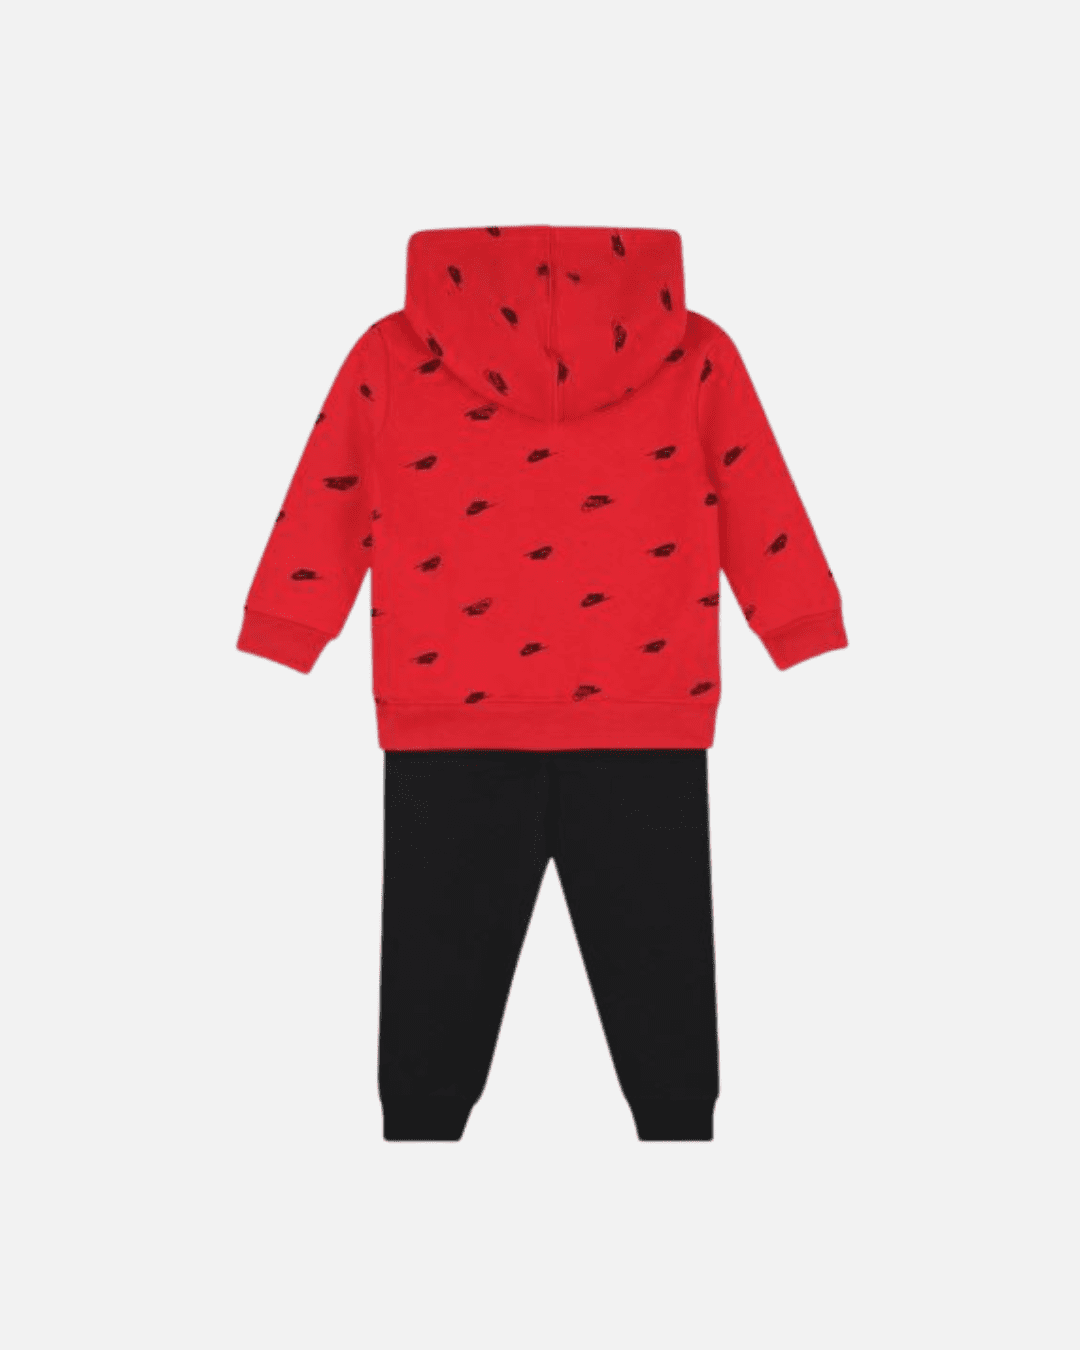 Nike Club SSNL AOP Baby Set - Black/Red